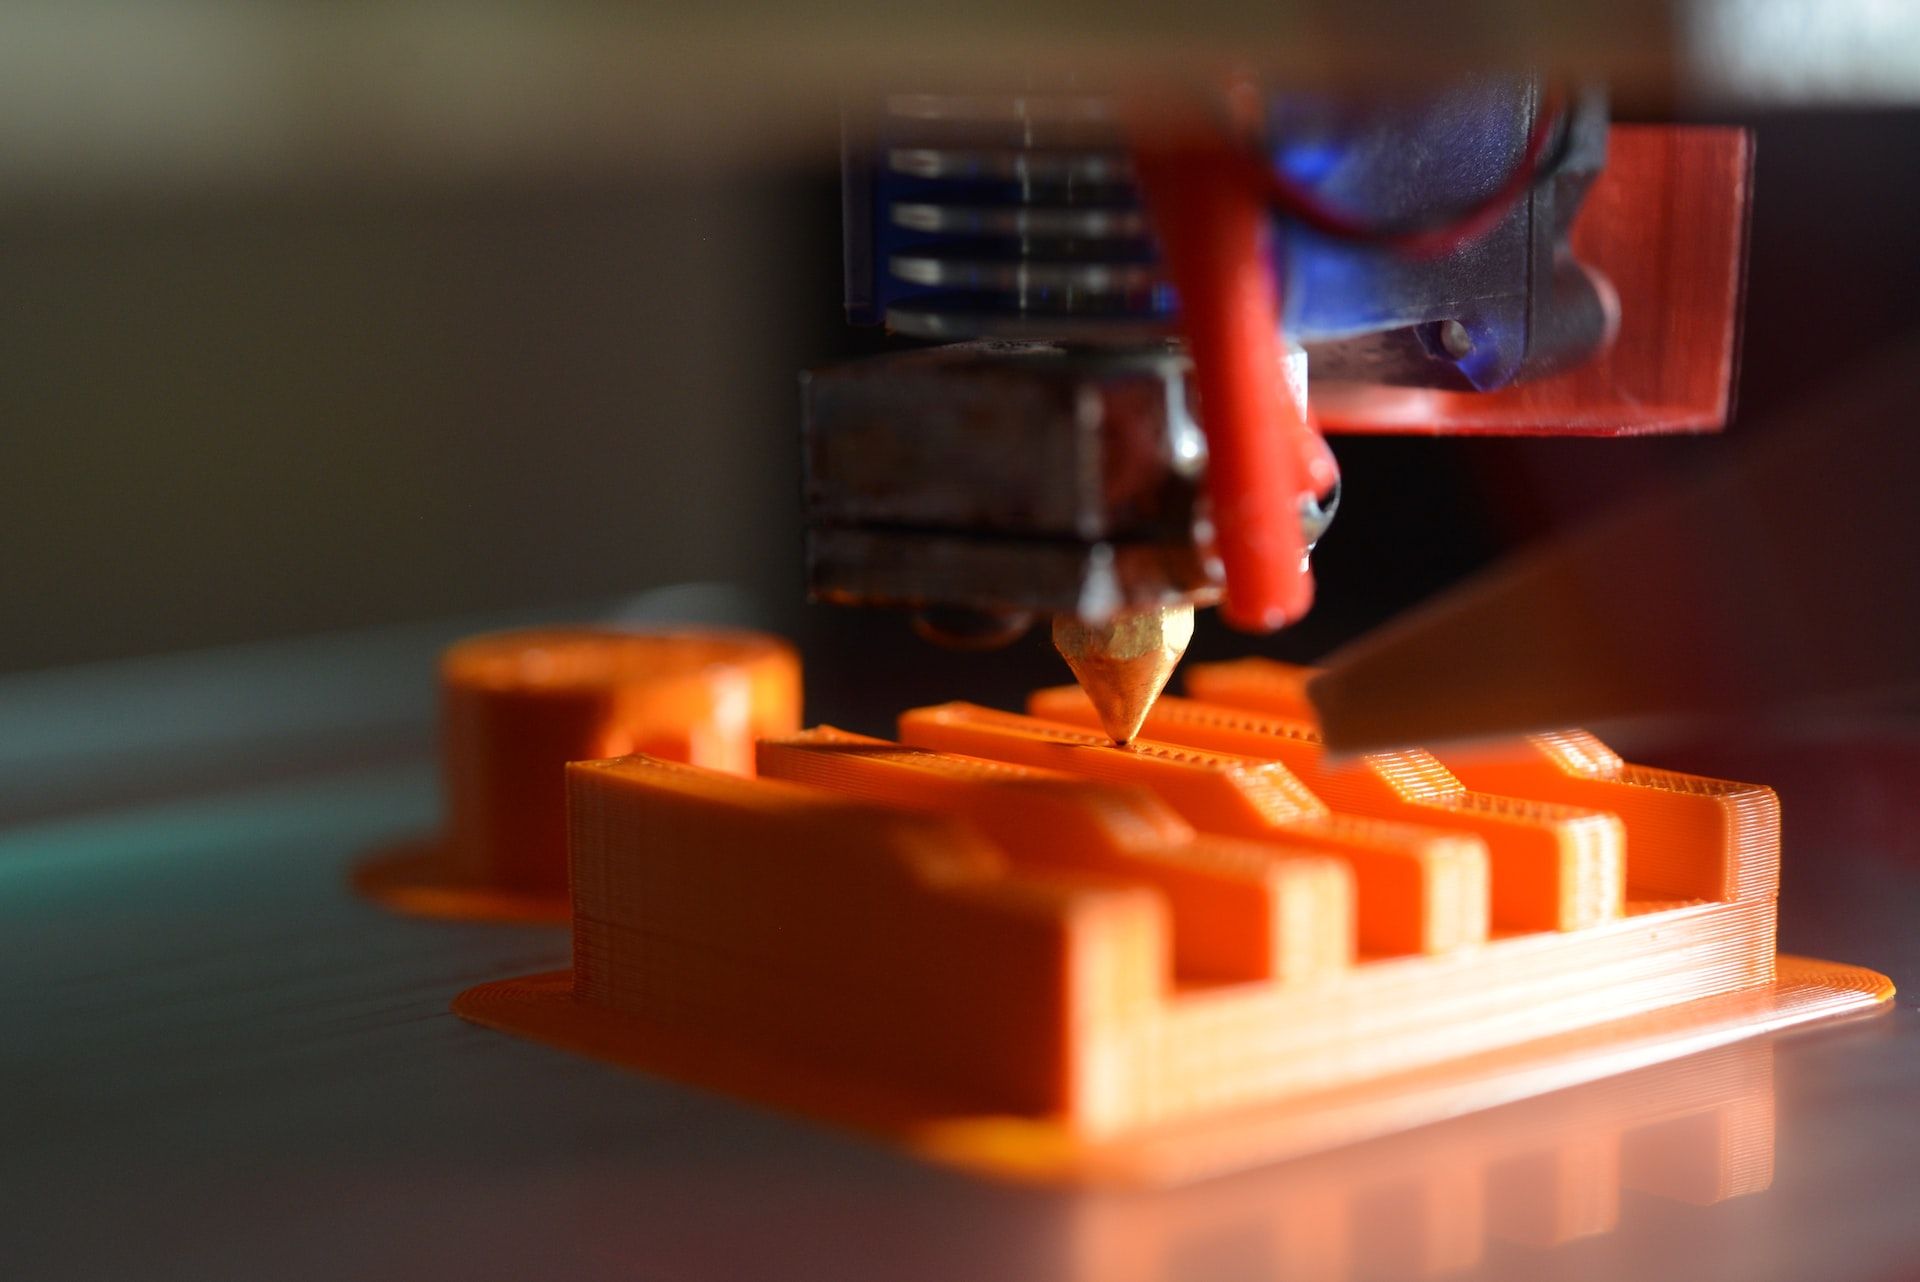 A 3D printer creating something